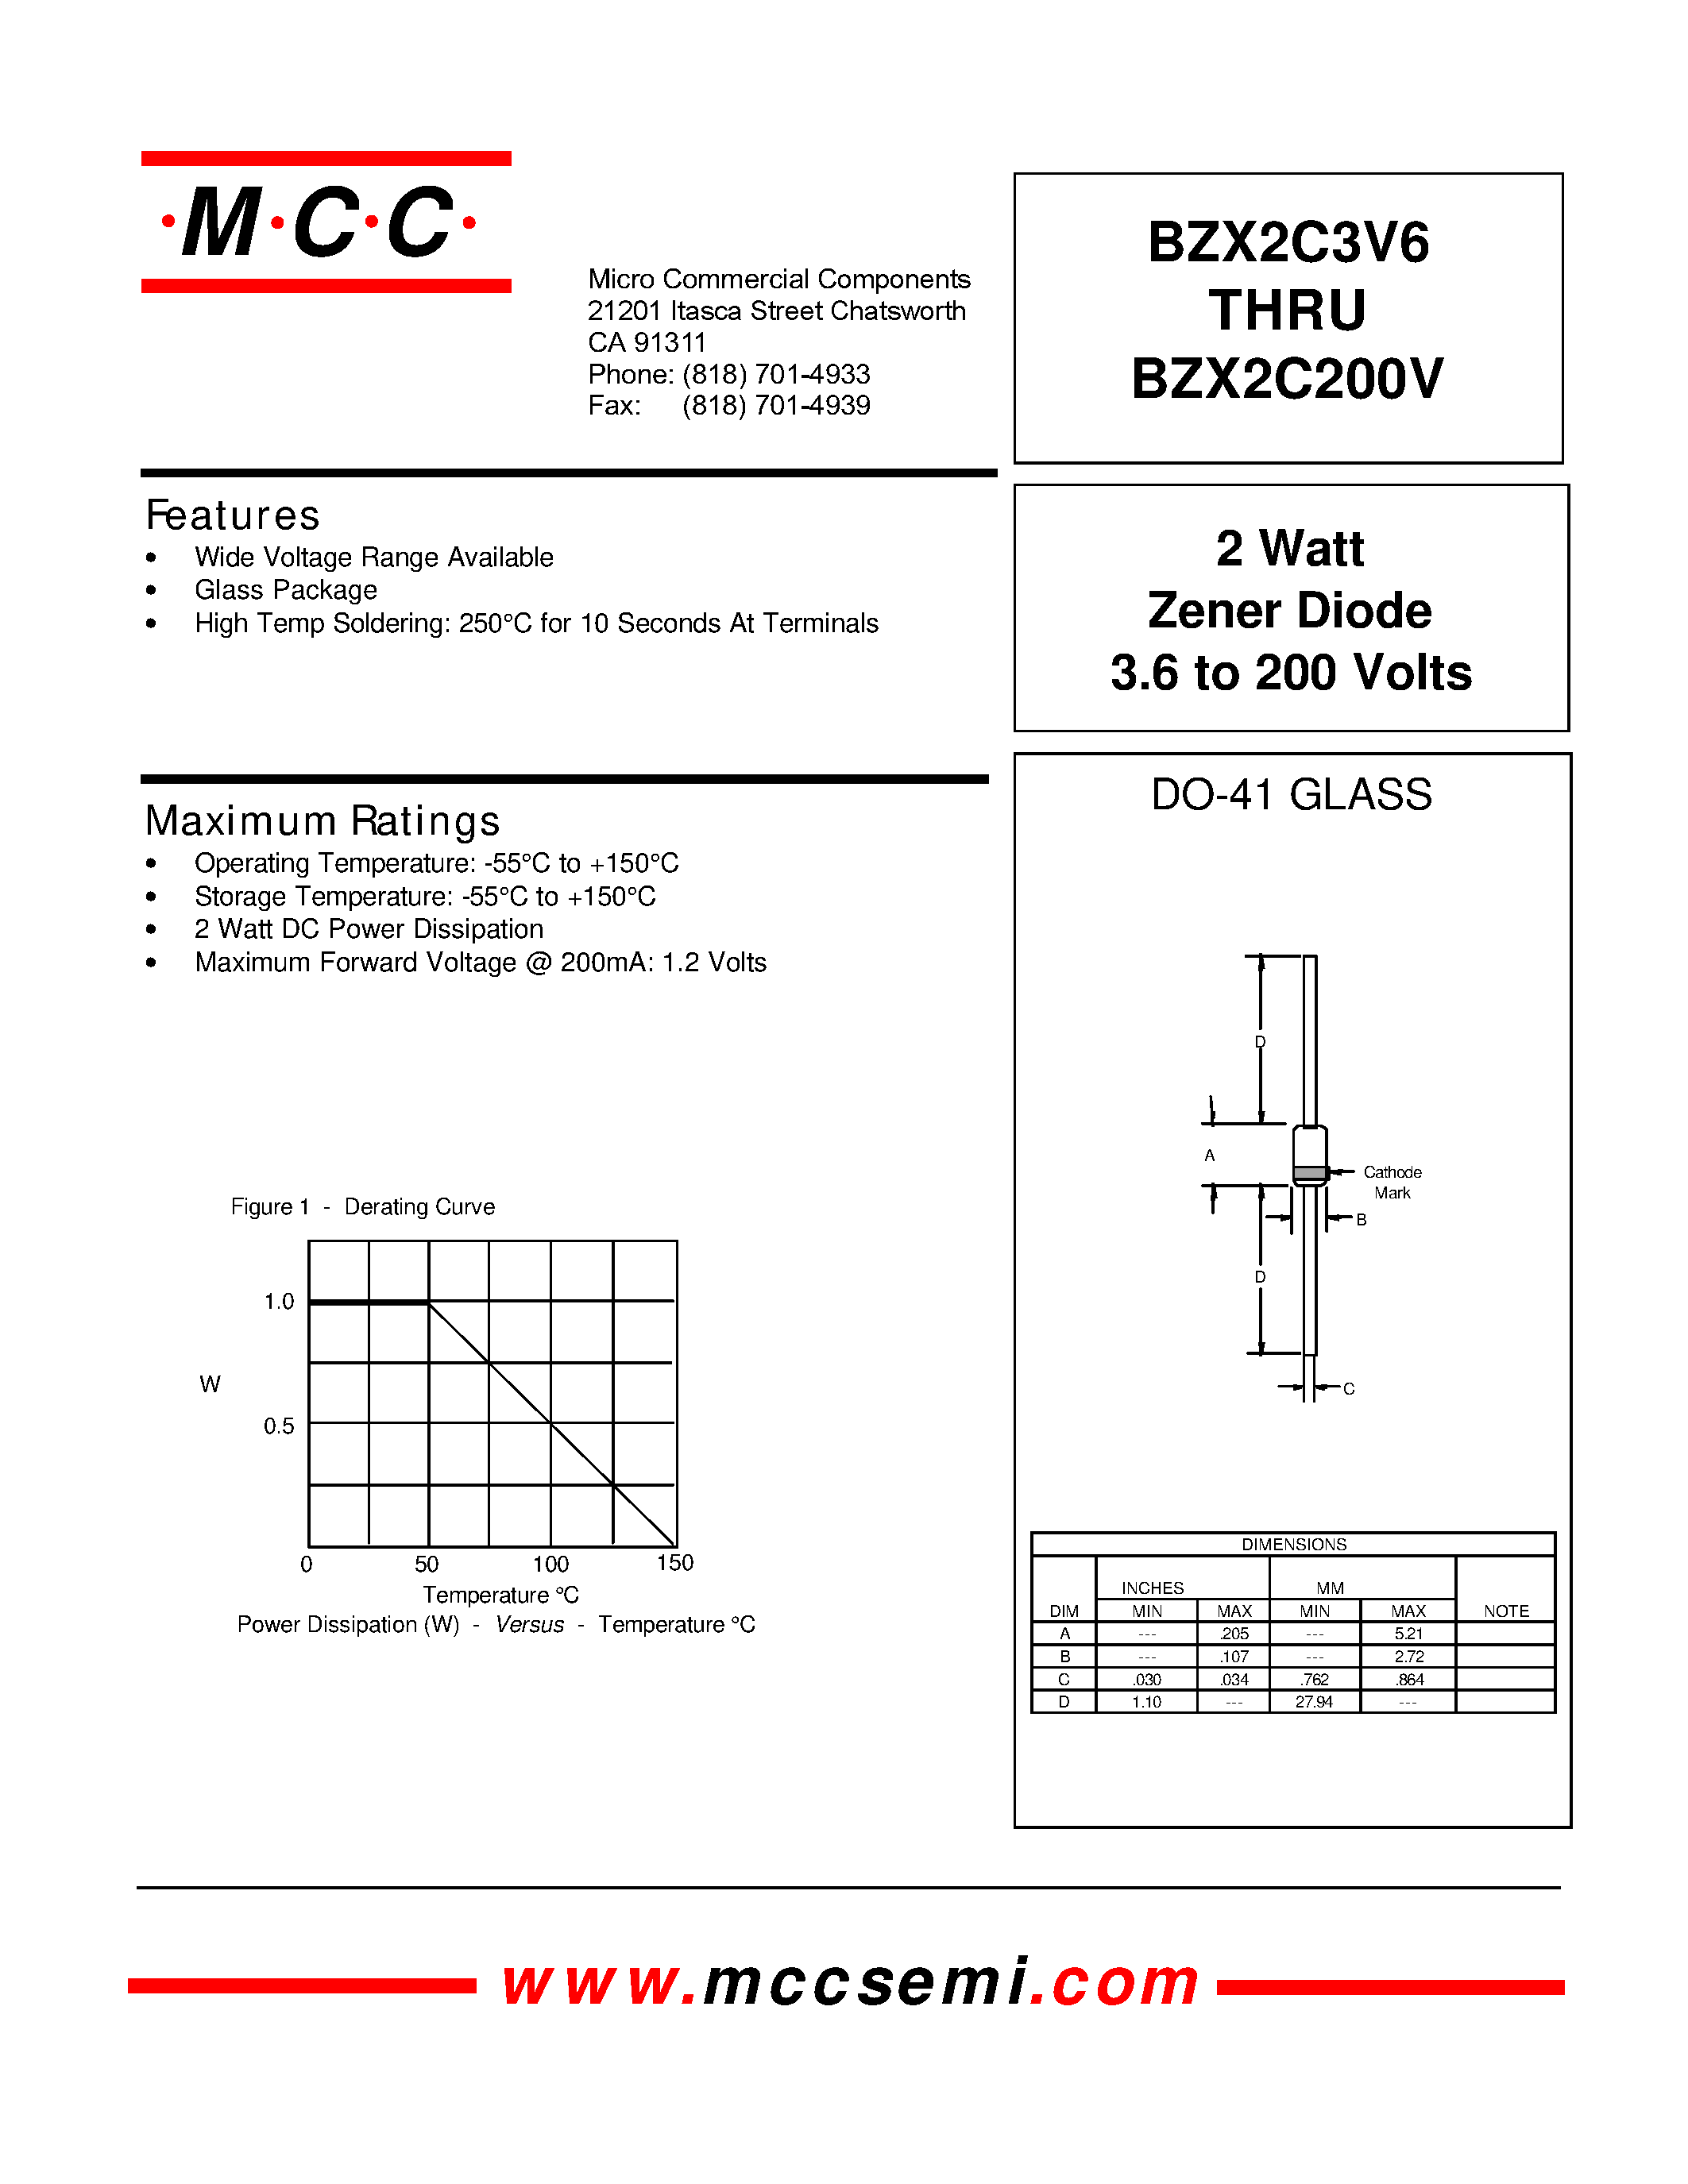 Datasheet BZX2C5V1 - 2 Watt Zener Diode 3.6 to 200 Volts page 1